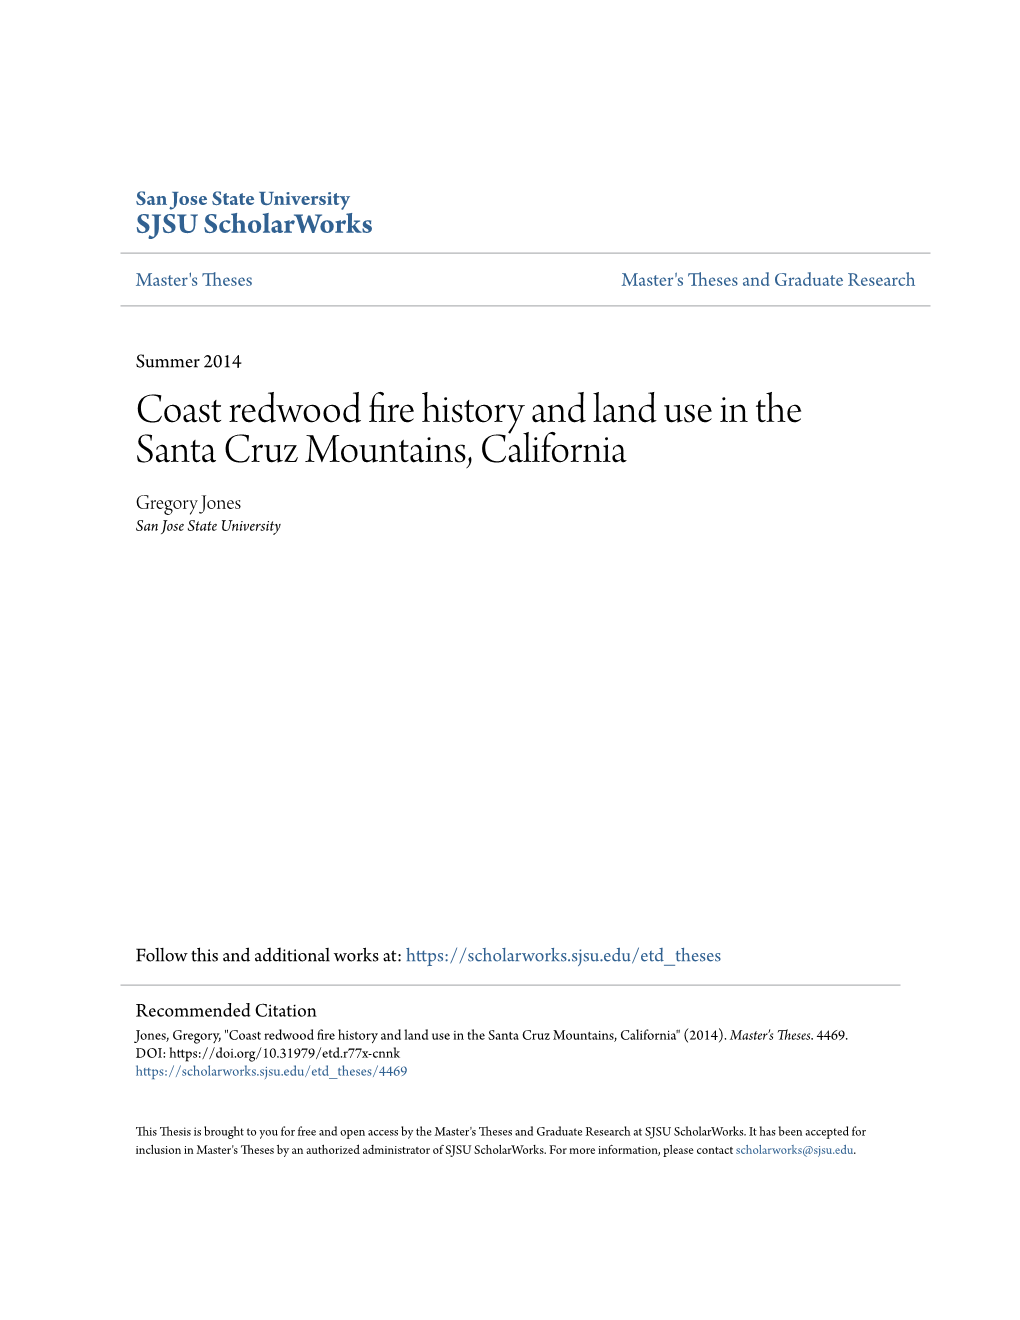 Coast Redwood Fire History and Land Use in the Santa Cruz Mountains, California Gregory Jones San Jose State University